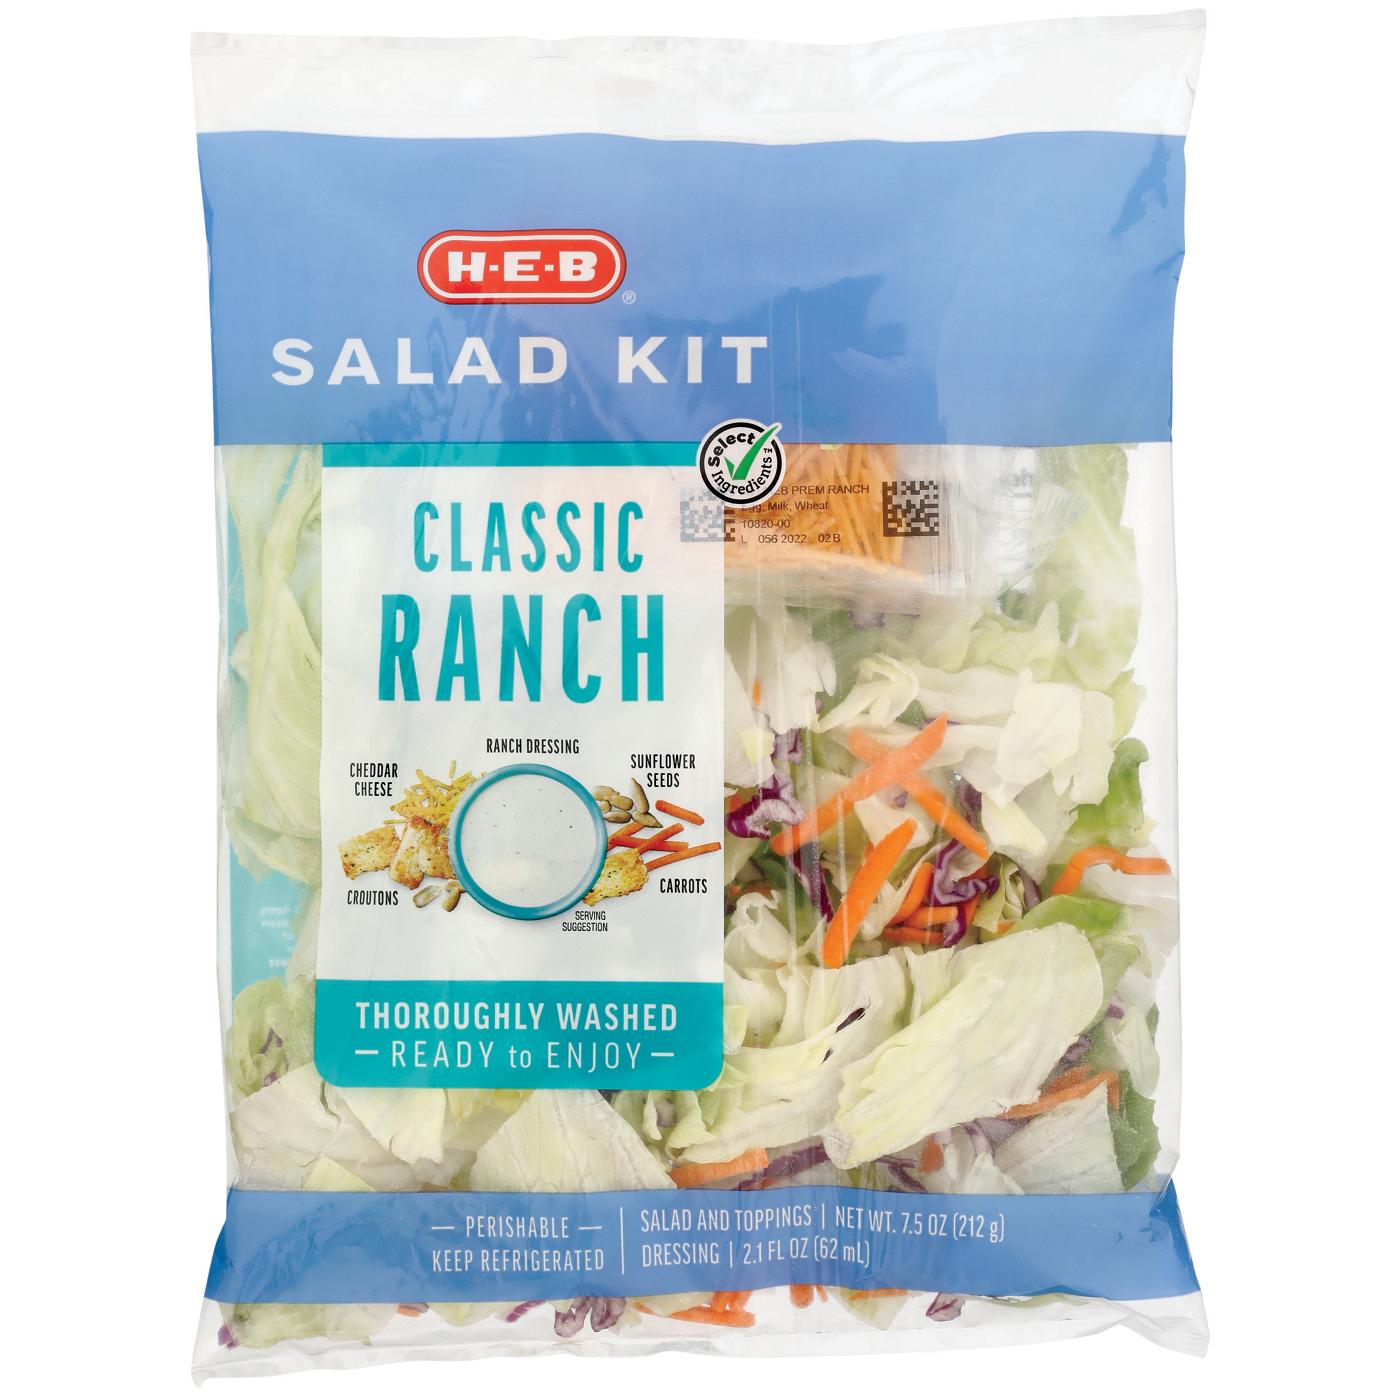 H-E-B Salad Kit - Classic Ranch; image 1 of 4